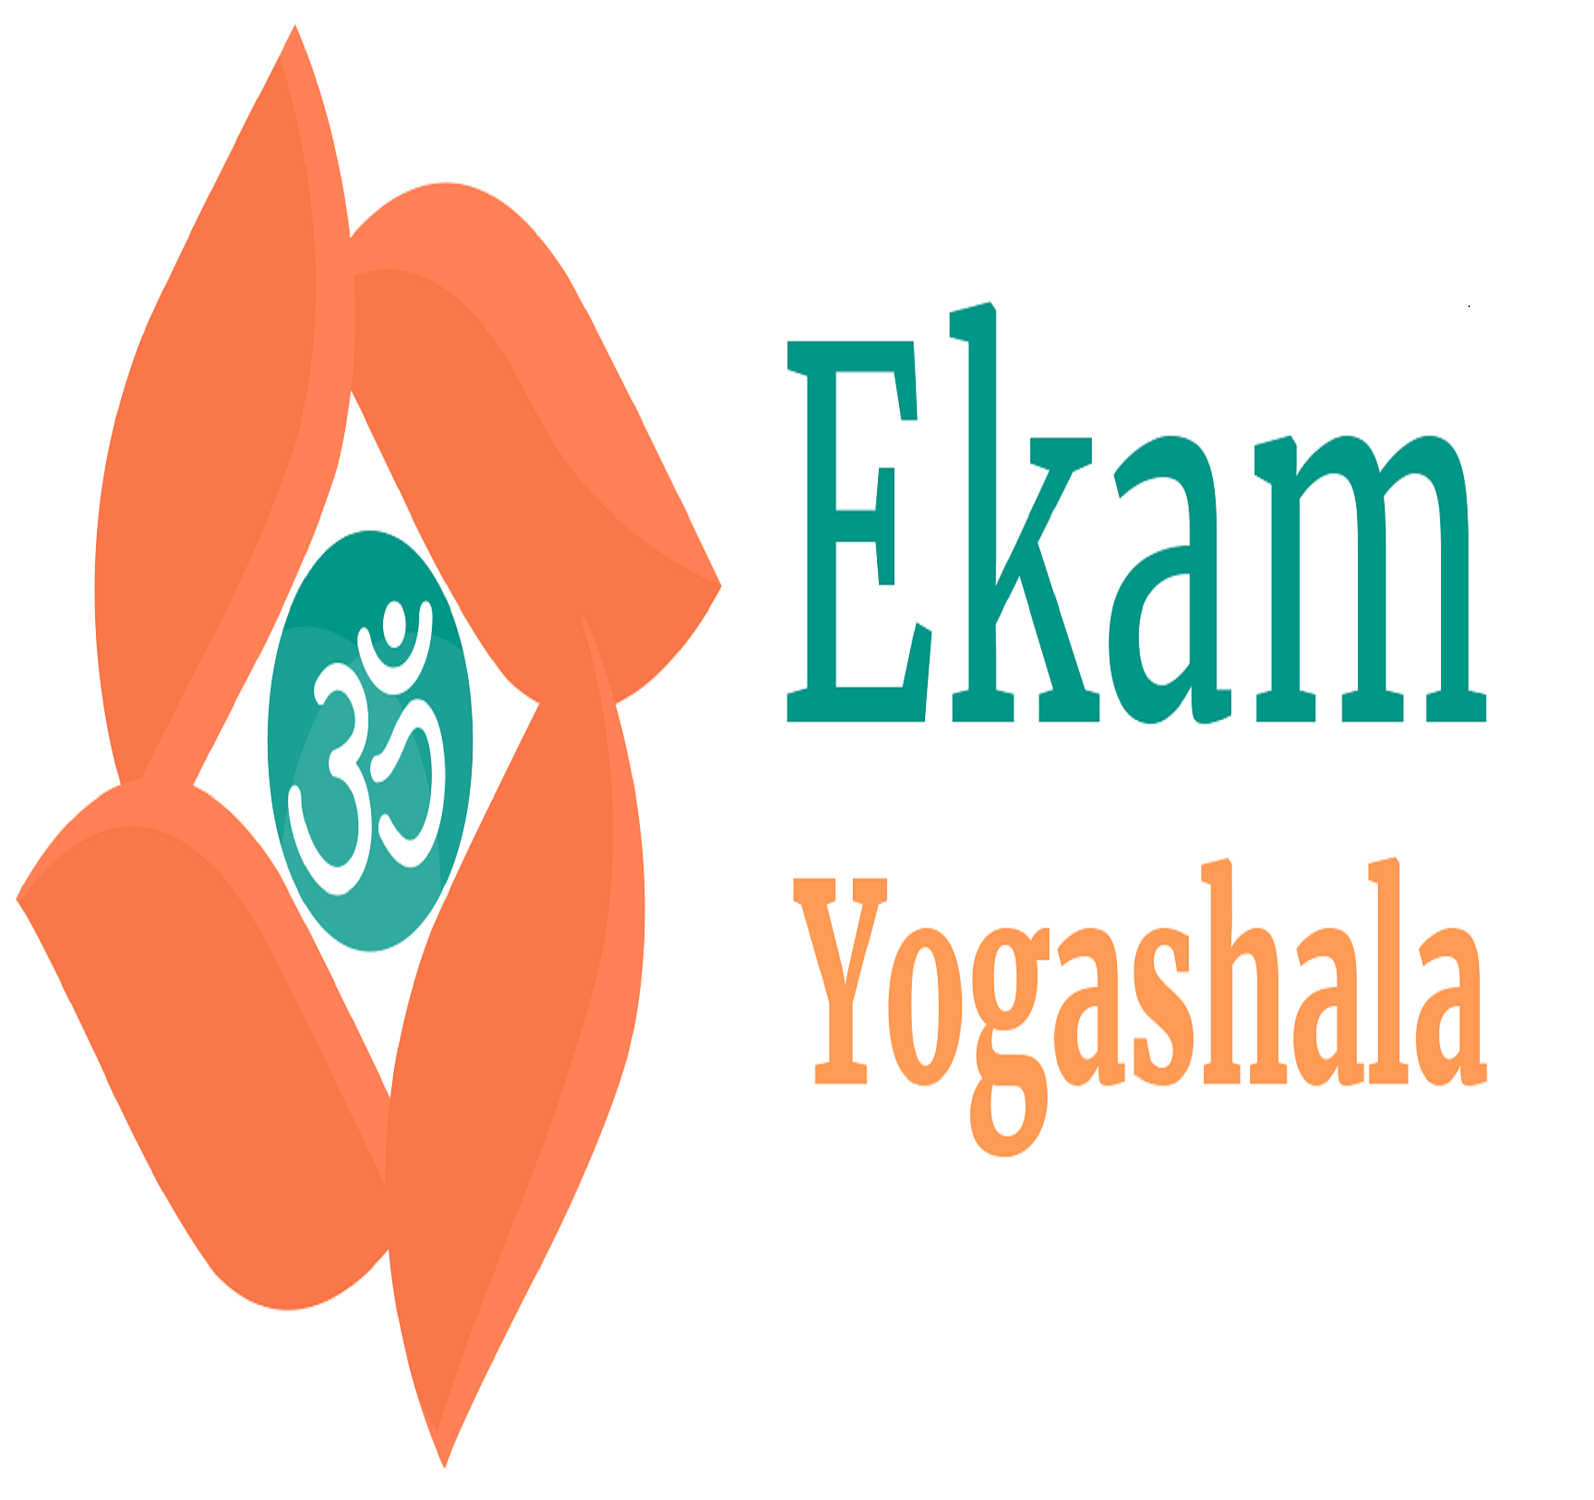 Йога студия Ekam Yogashala Ришикеш